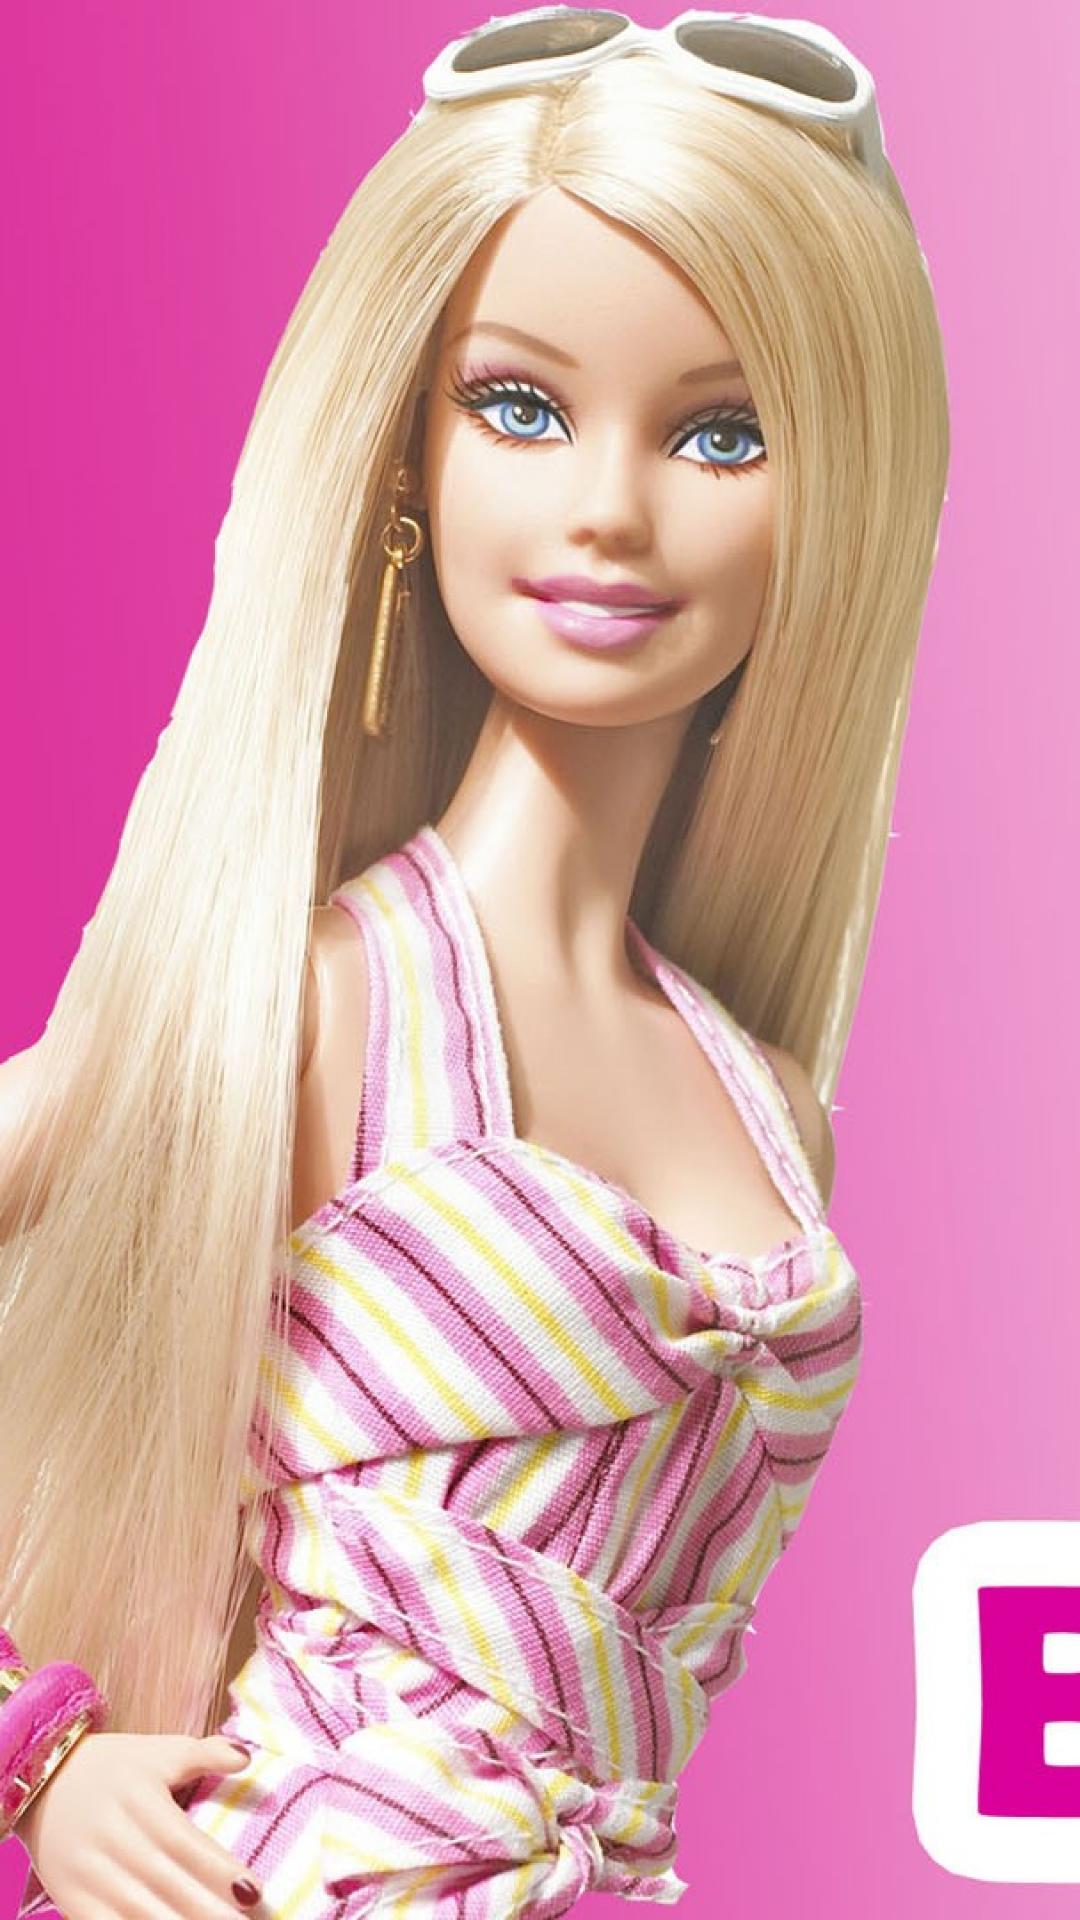 barbie wallpaper,doll,hair,barbie,blond,toy